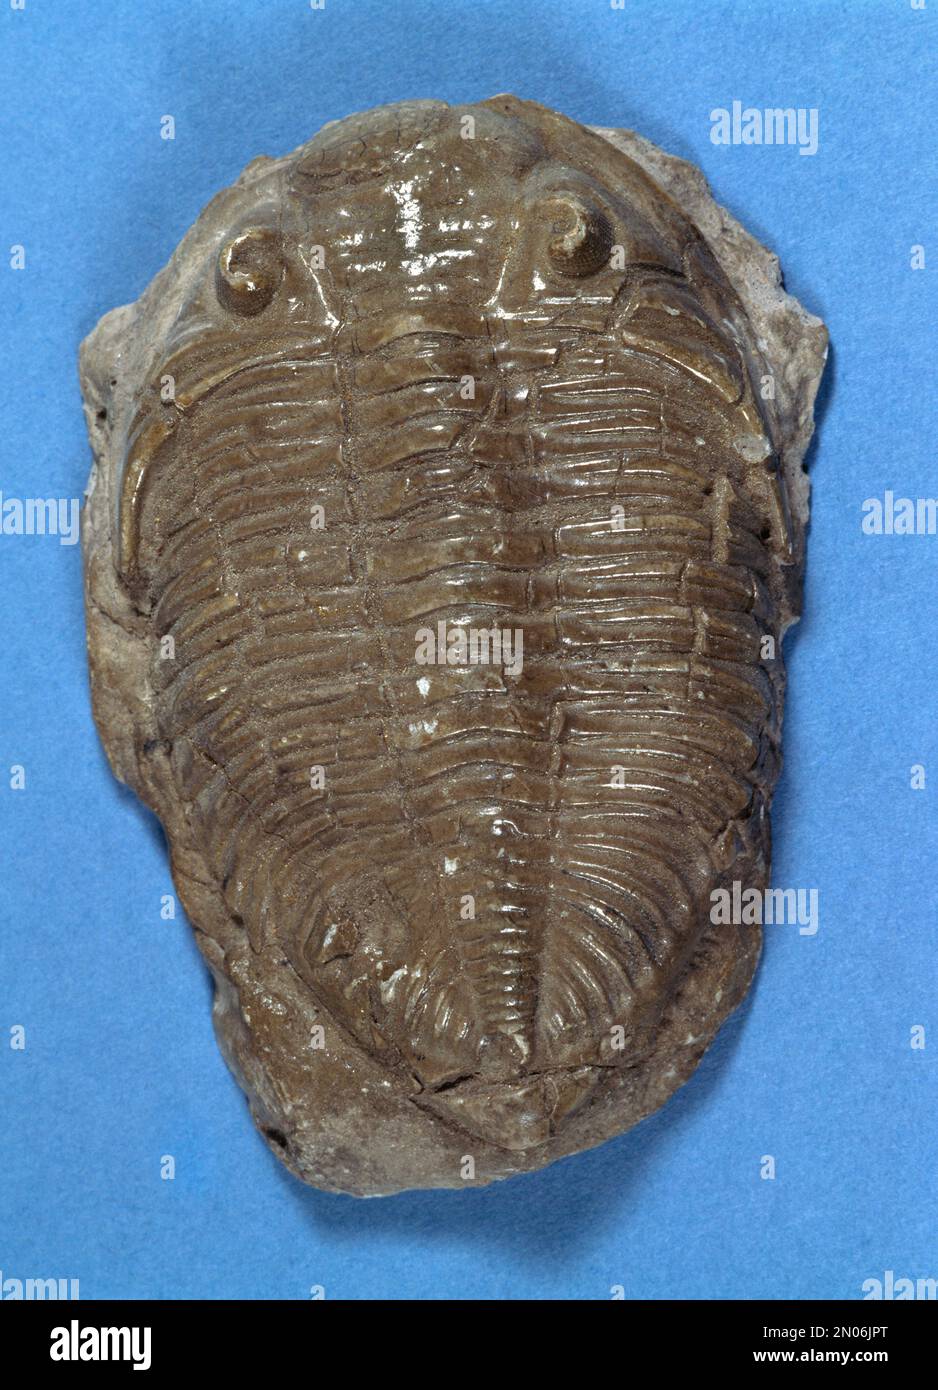 Artropodi marini Trilobite Fossil Foto Stock